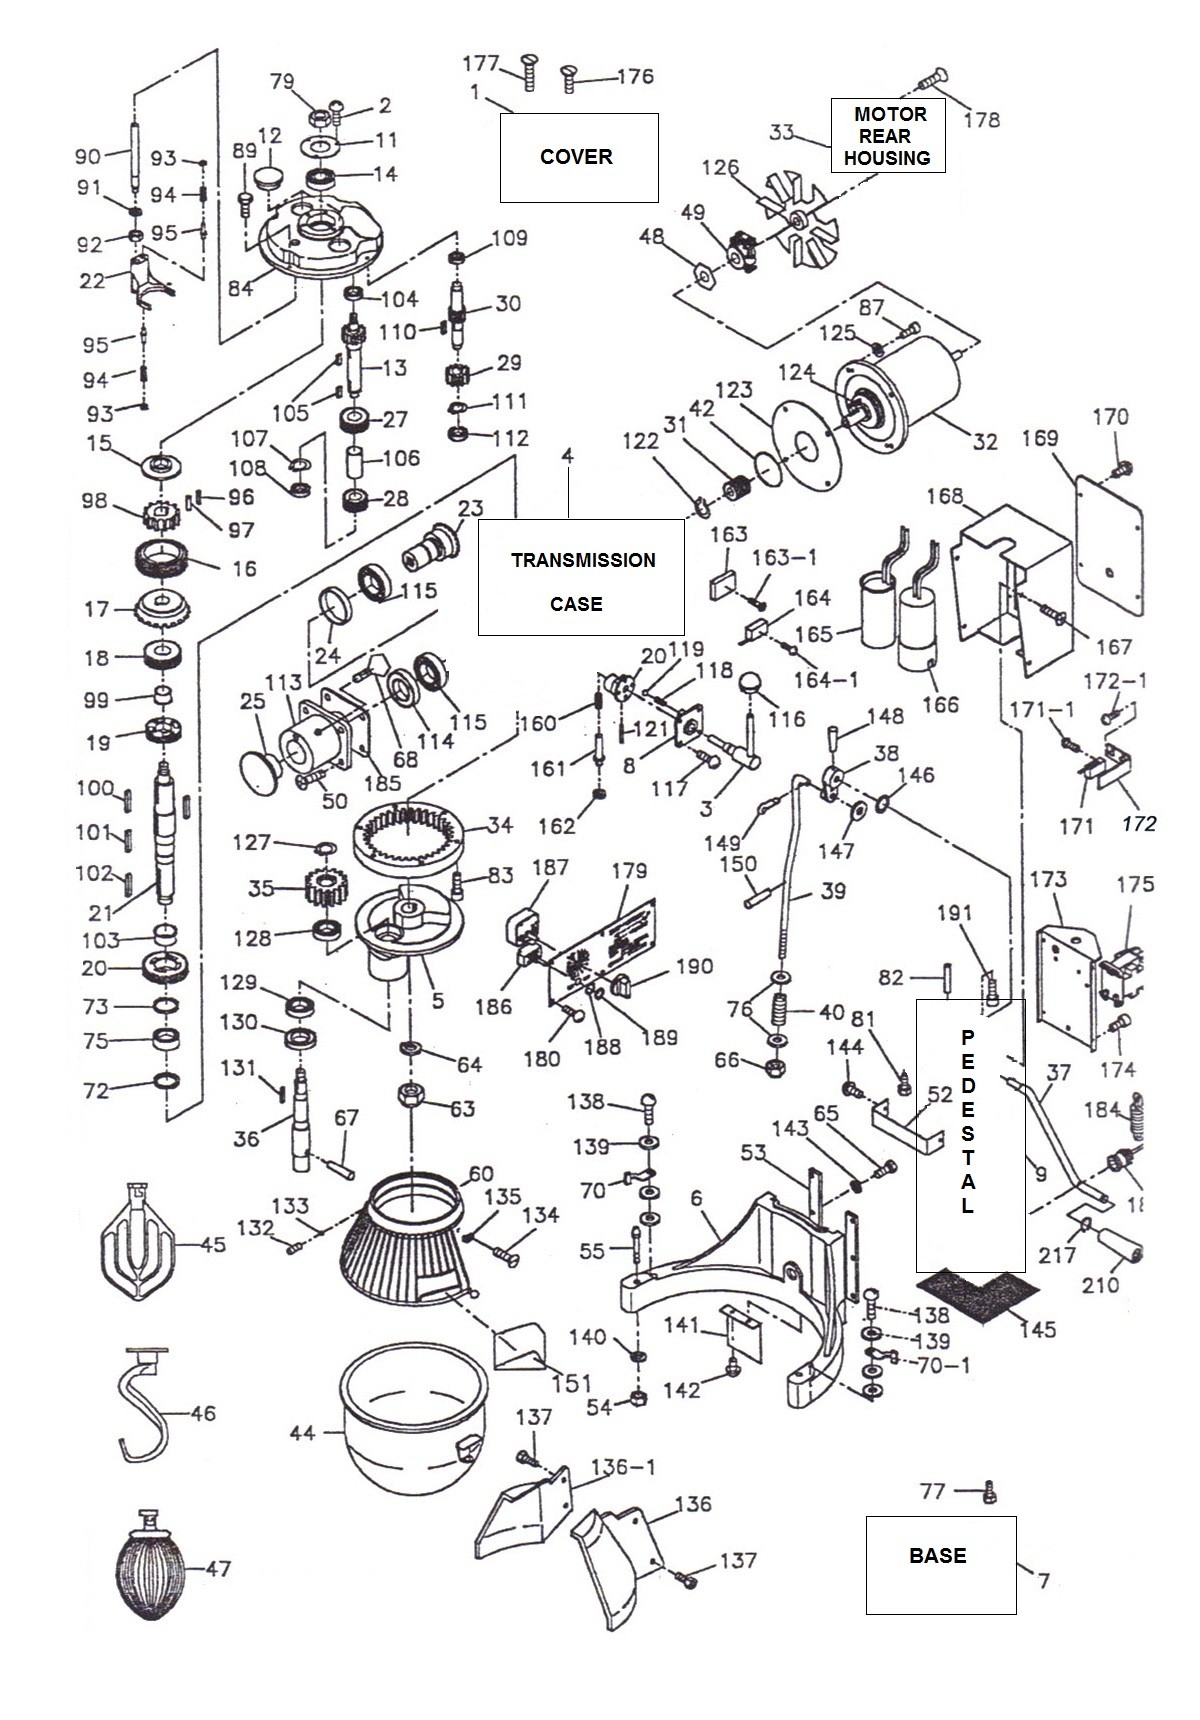 Hobart Mixer Parts Diagram | My Wiring DIagram